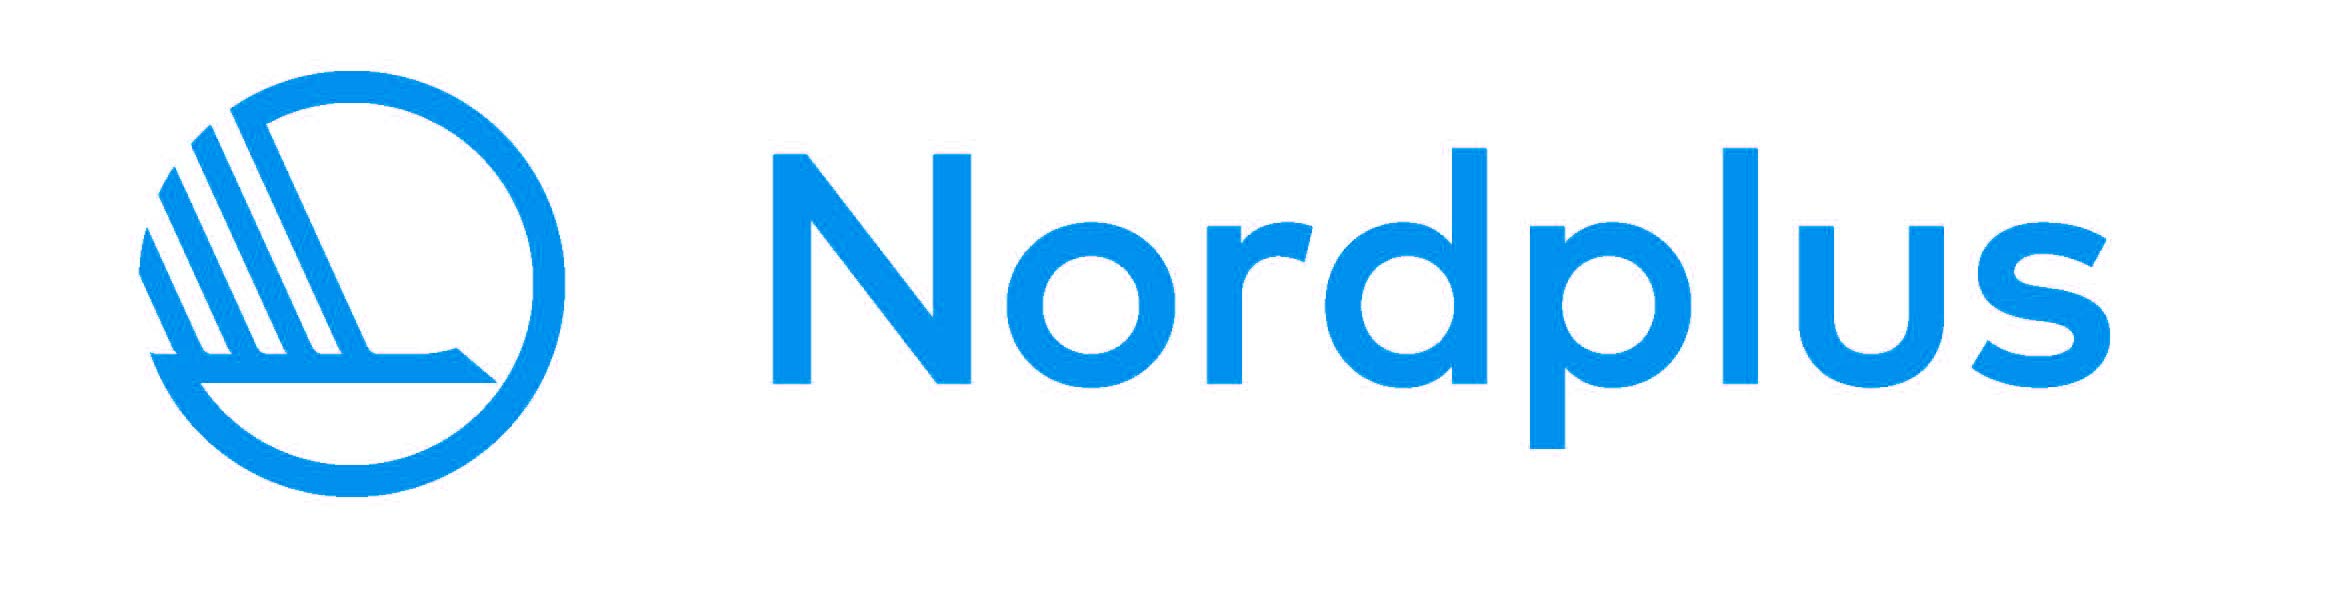 Nordplus Adult 2021 projektas